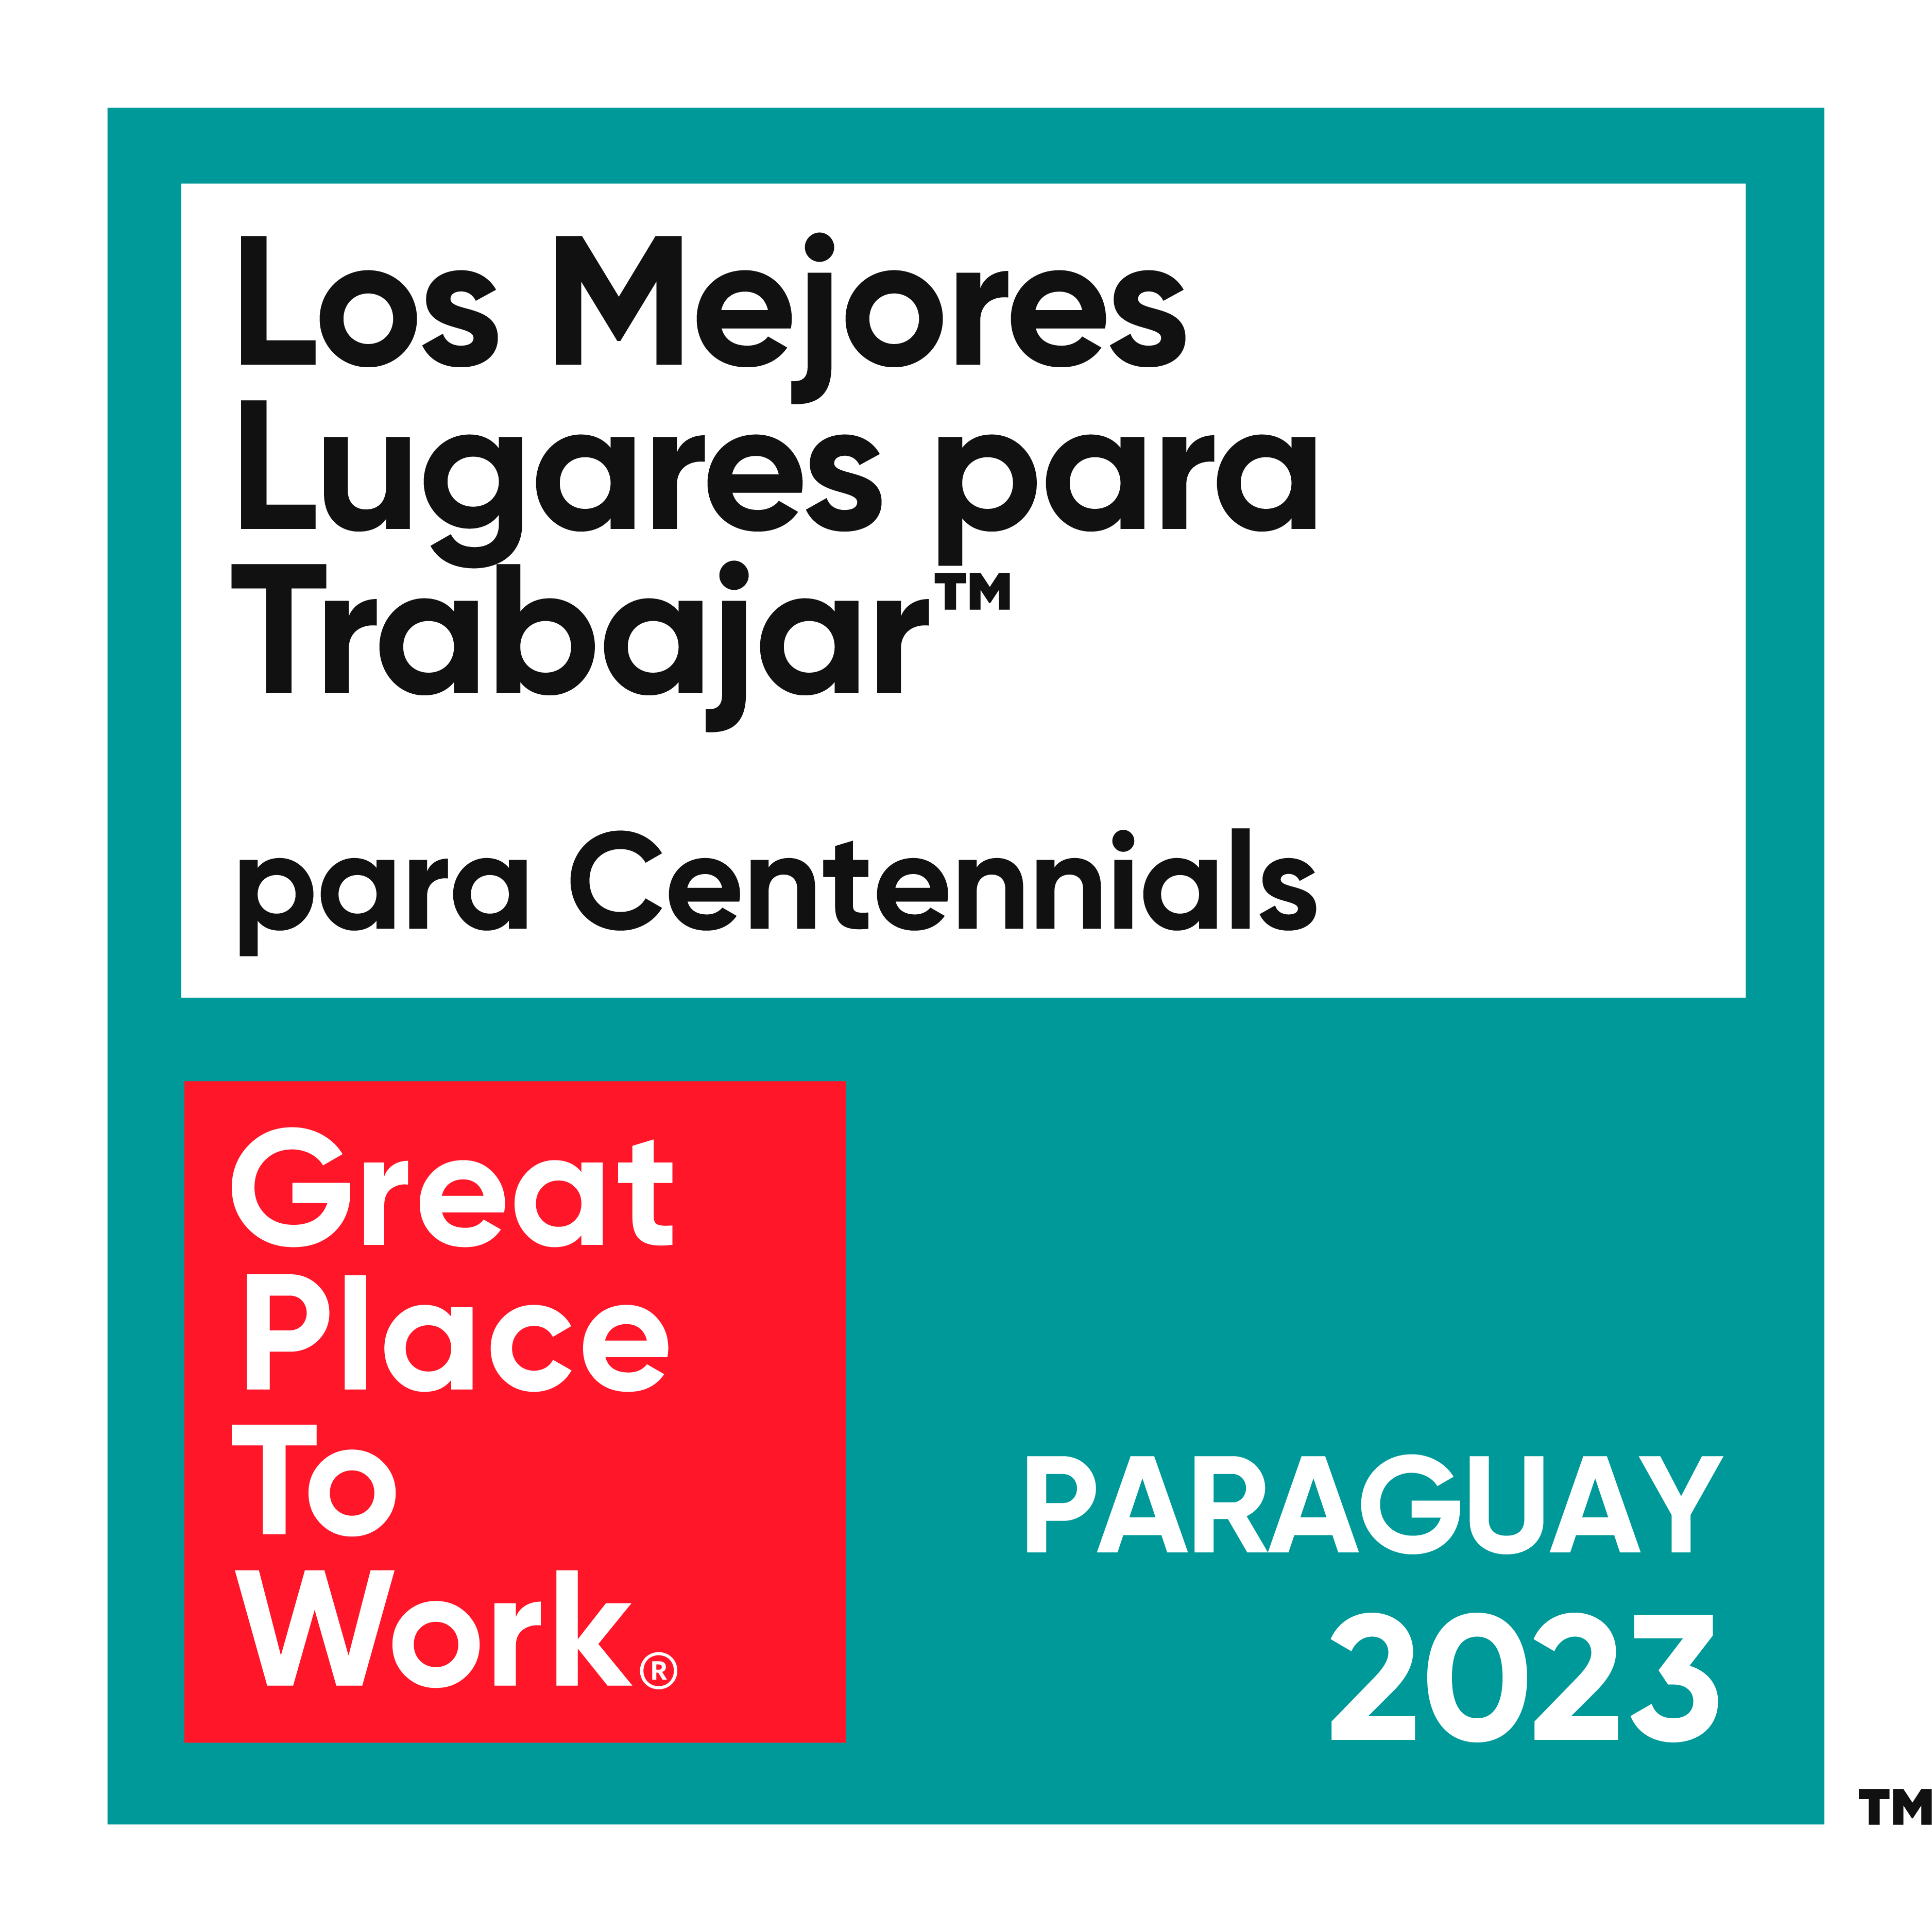 2023_PARAGUAY_los_mejores_lugares_para_trabaljar_para_centennials